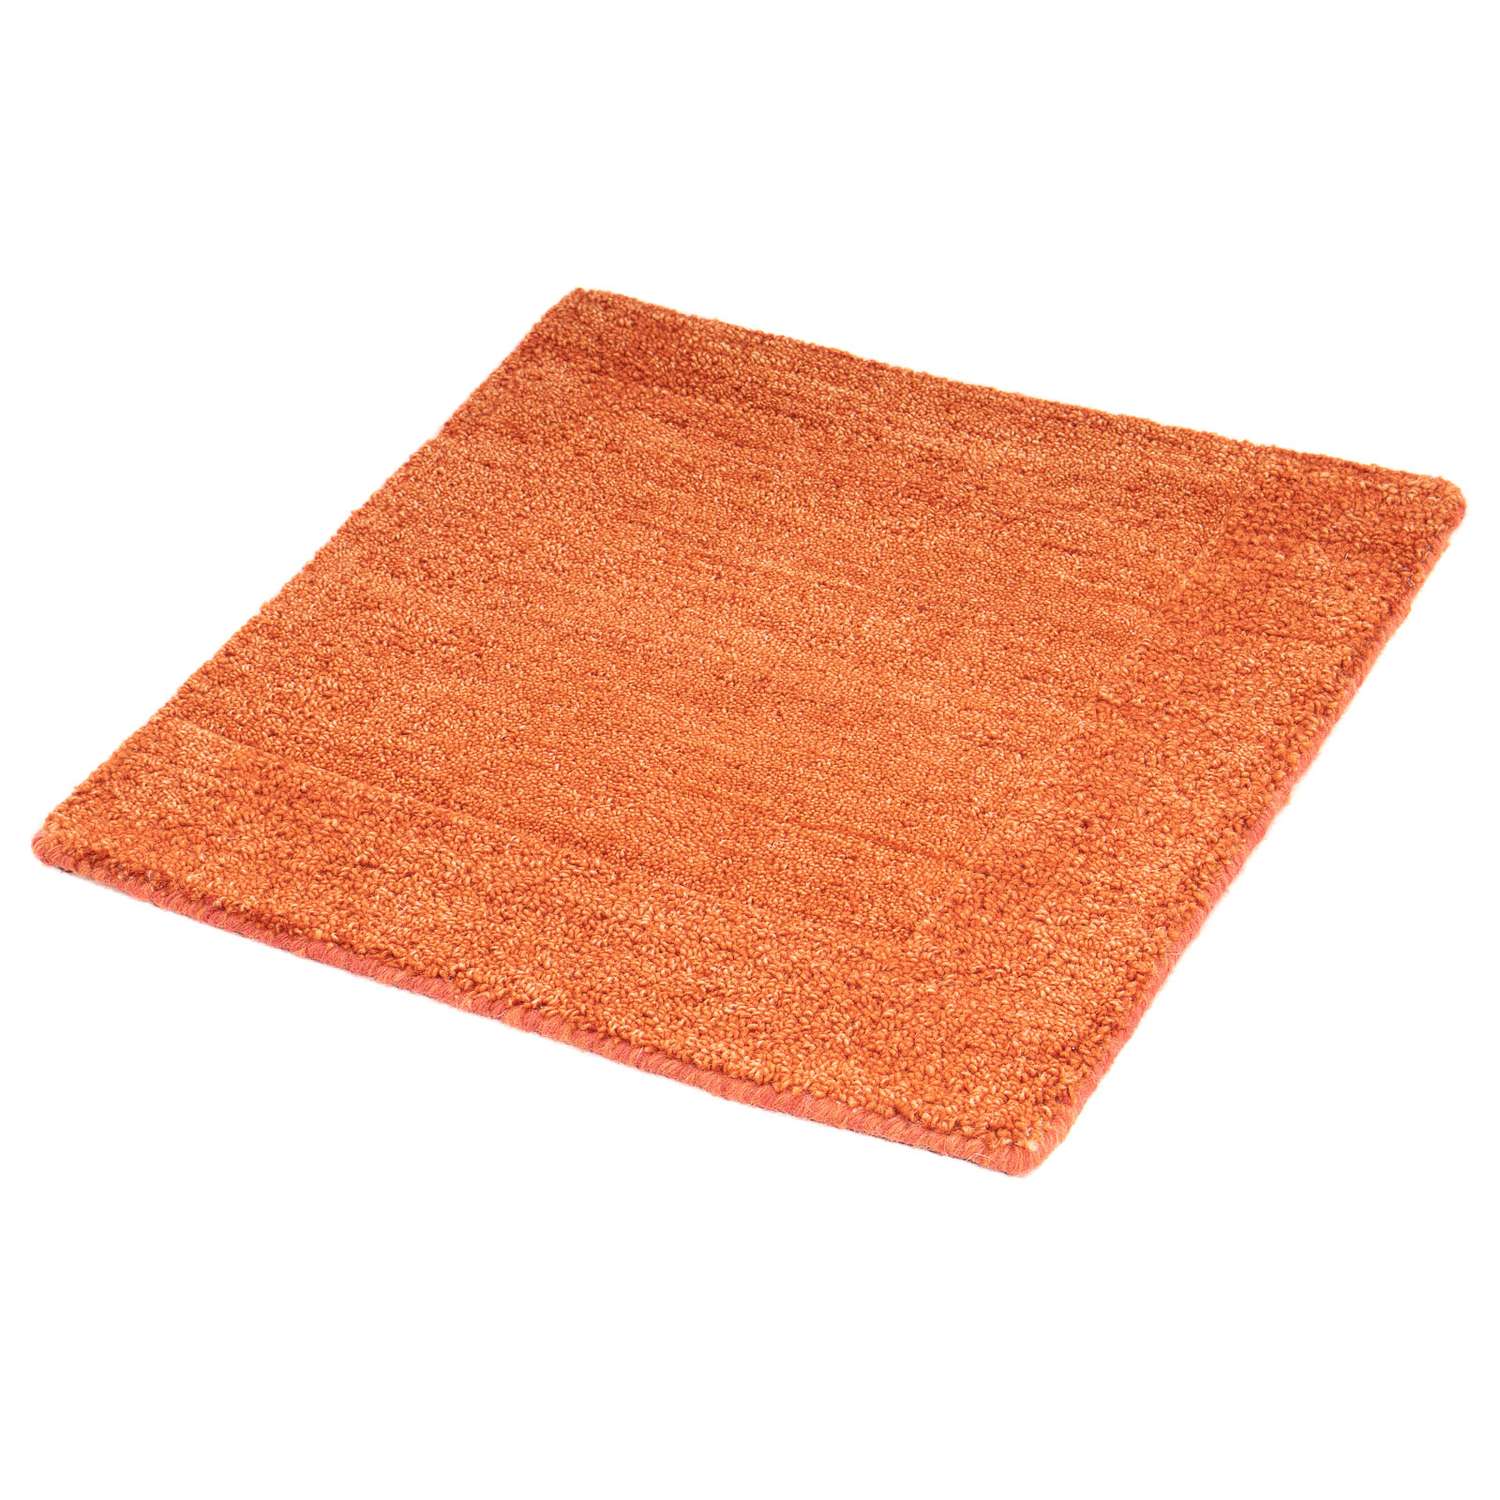 Wool Rug square  - 47 x 47 cm - orange